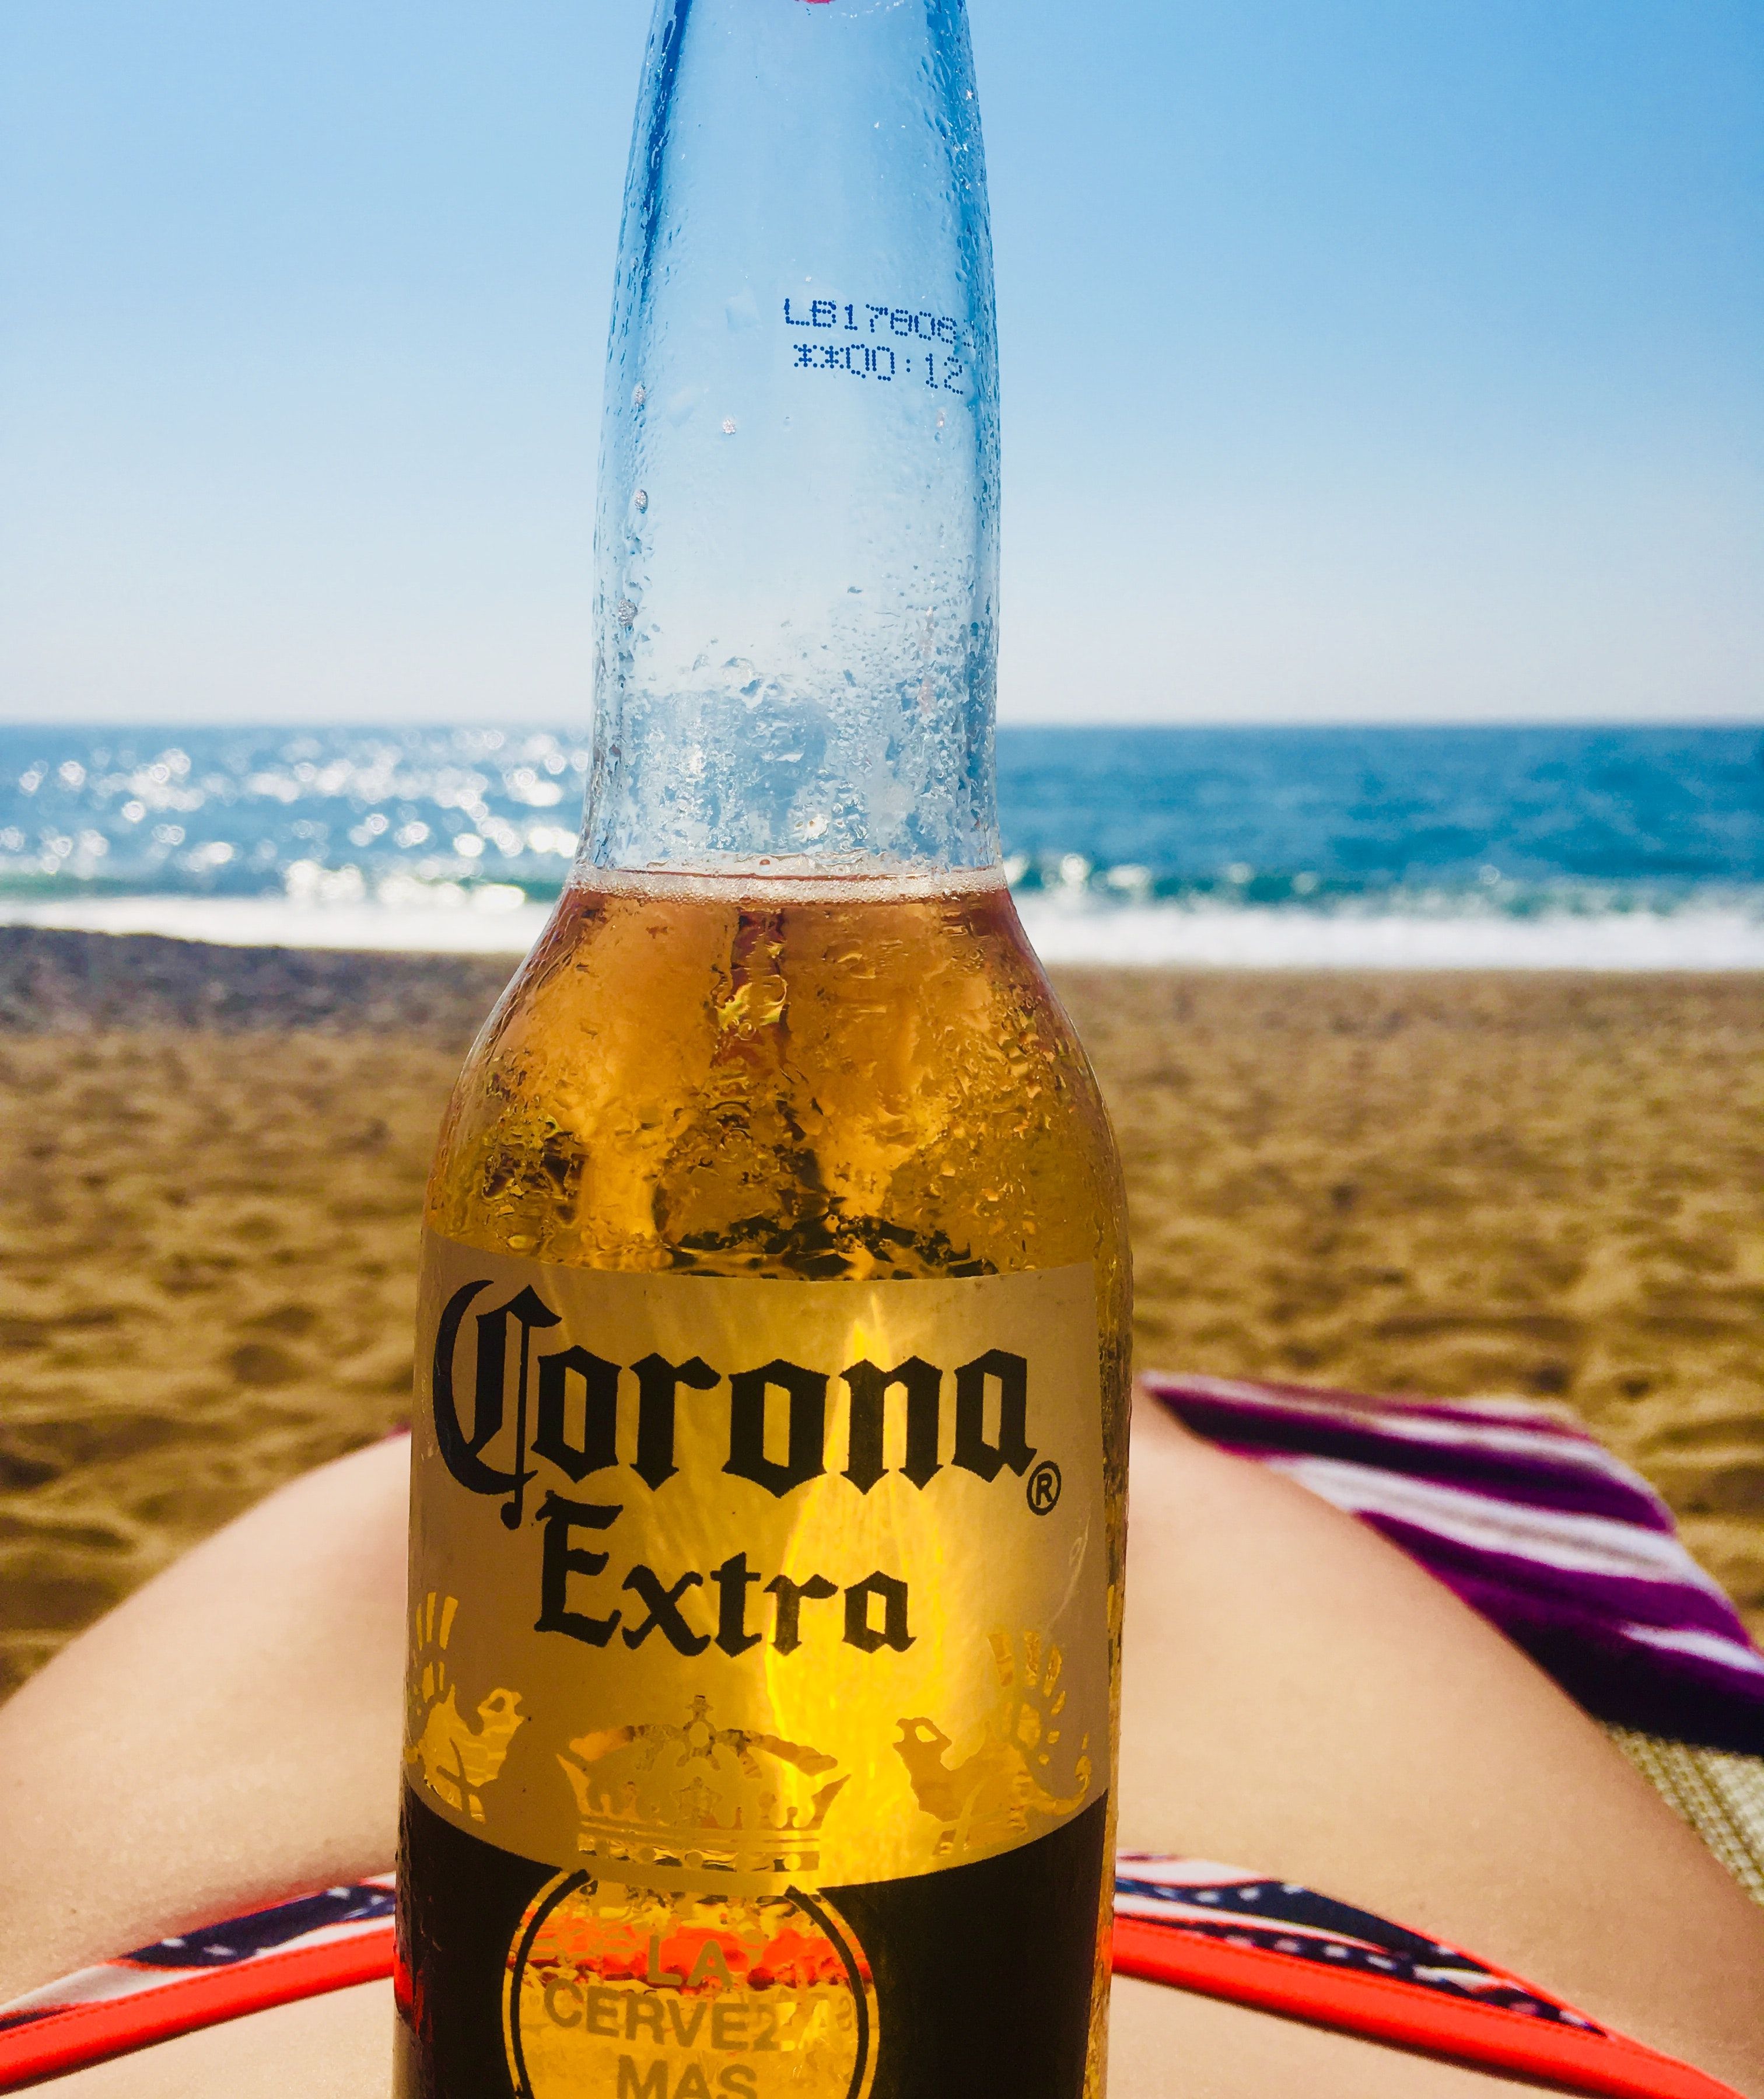 Free of beer and beach, Beer on stomach, corona beer